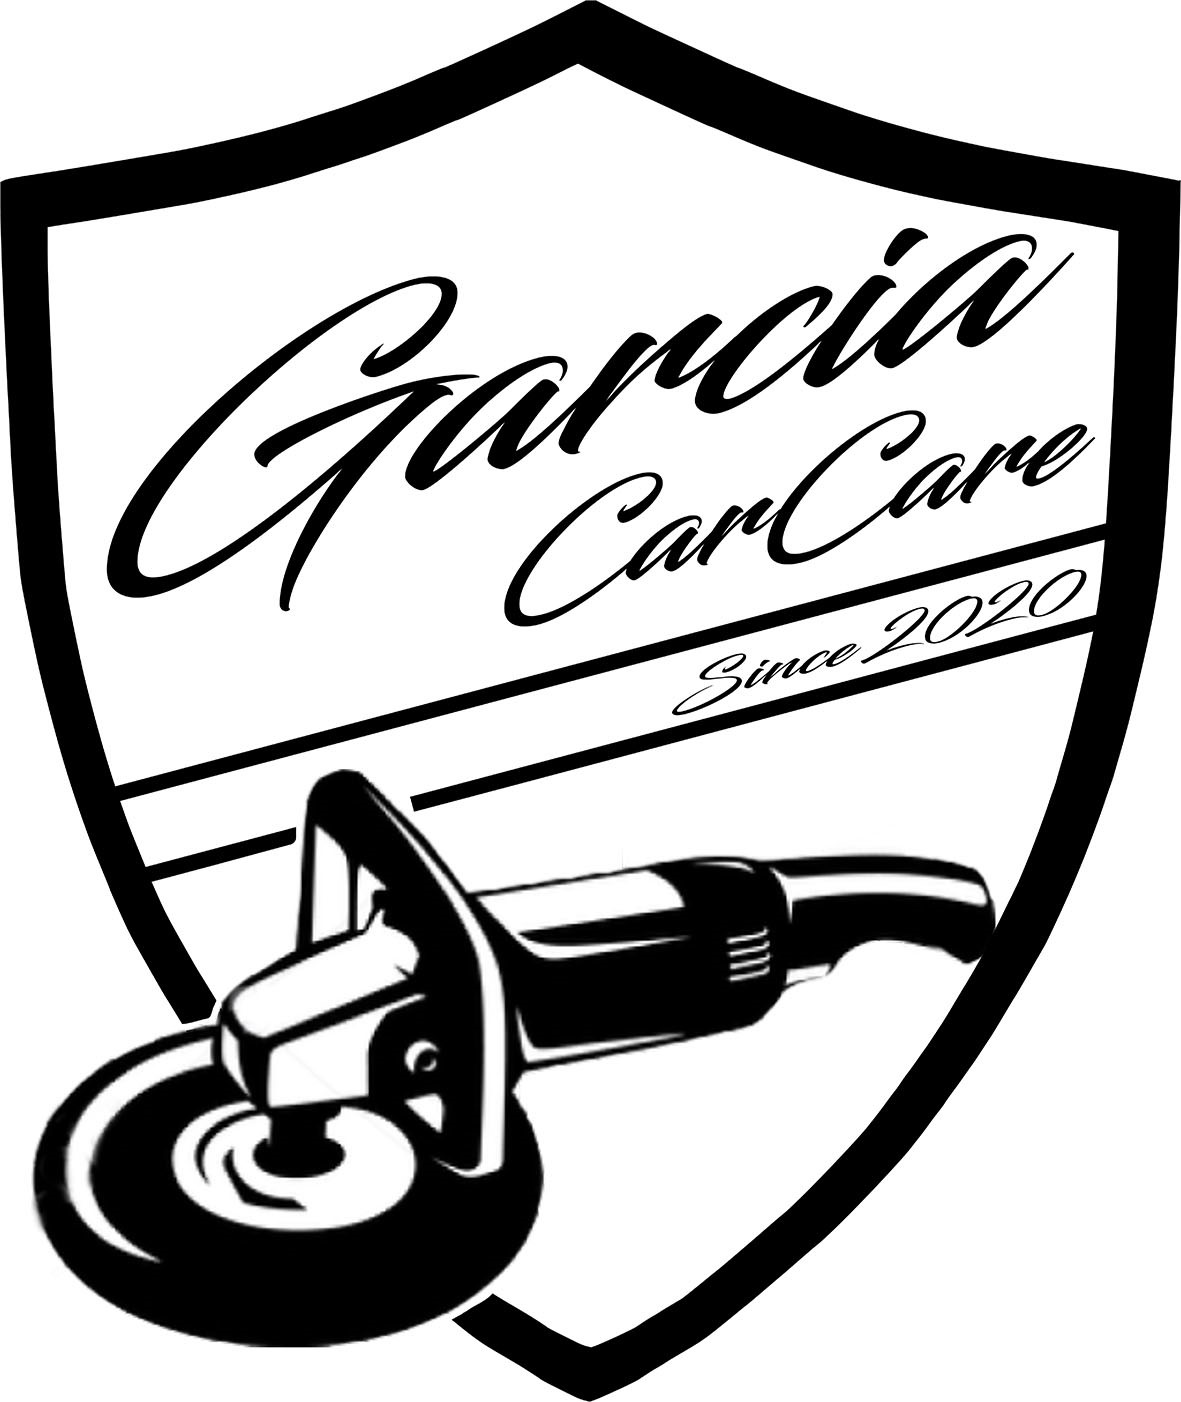 Garcia Carcare